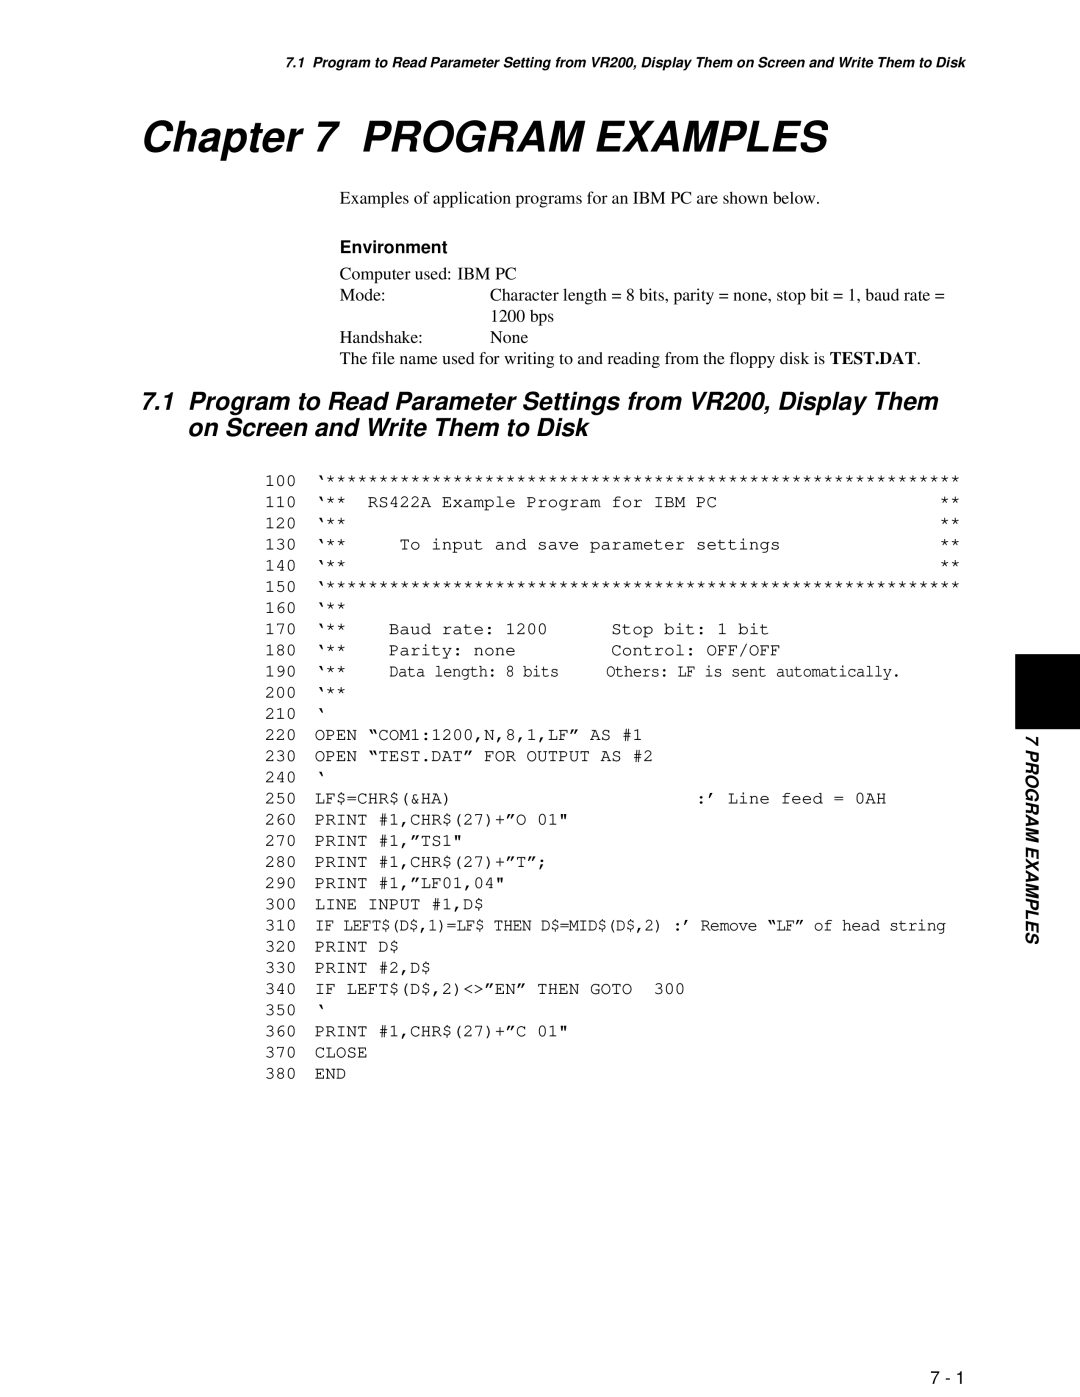 Omega Speaker Systems VR200 instruction manual Program Examples, Environment 